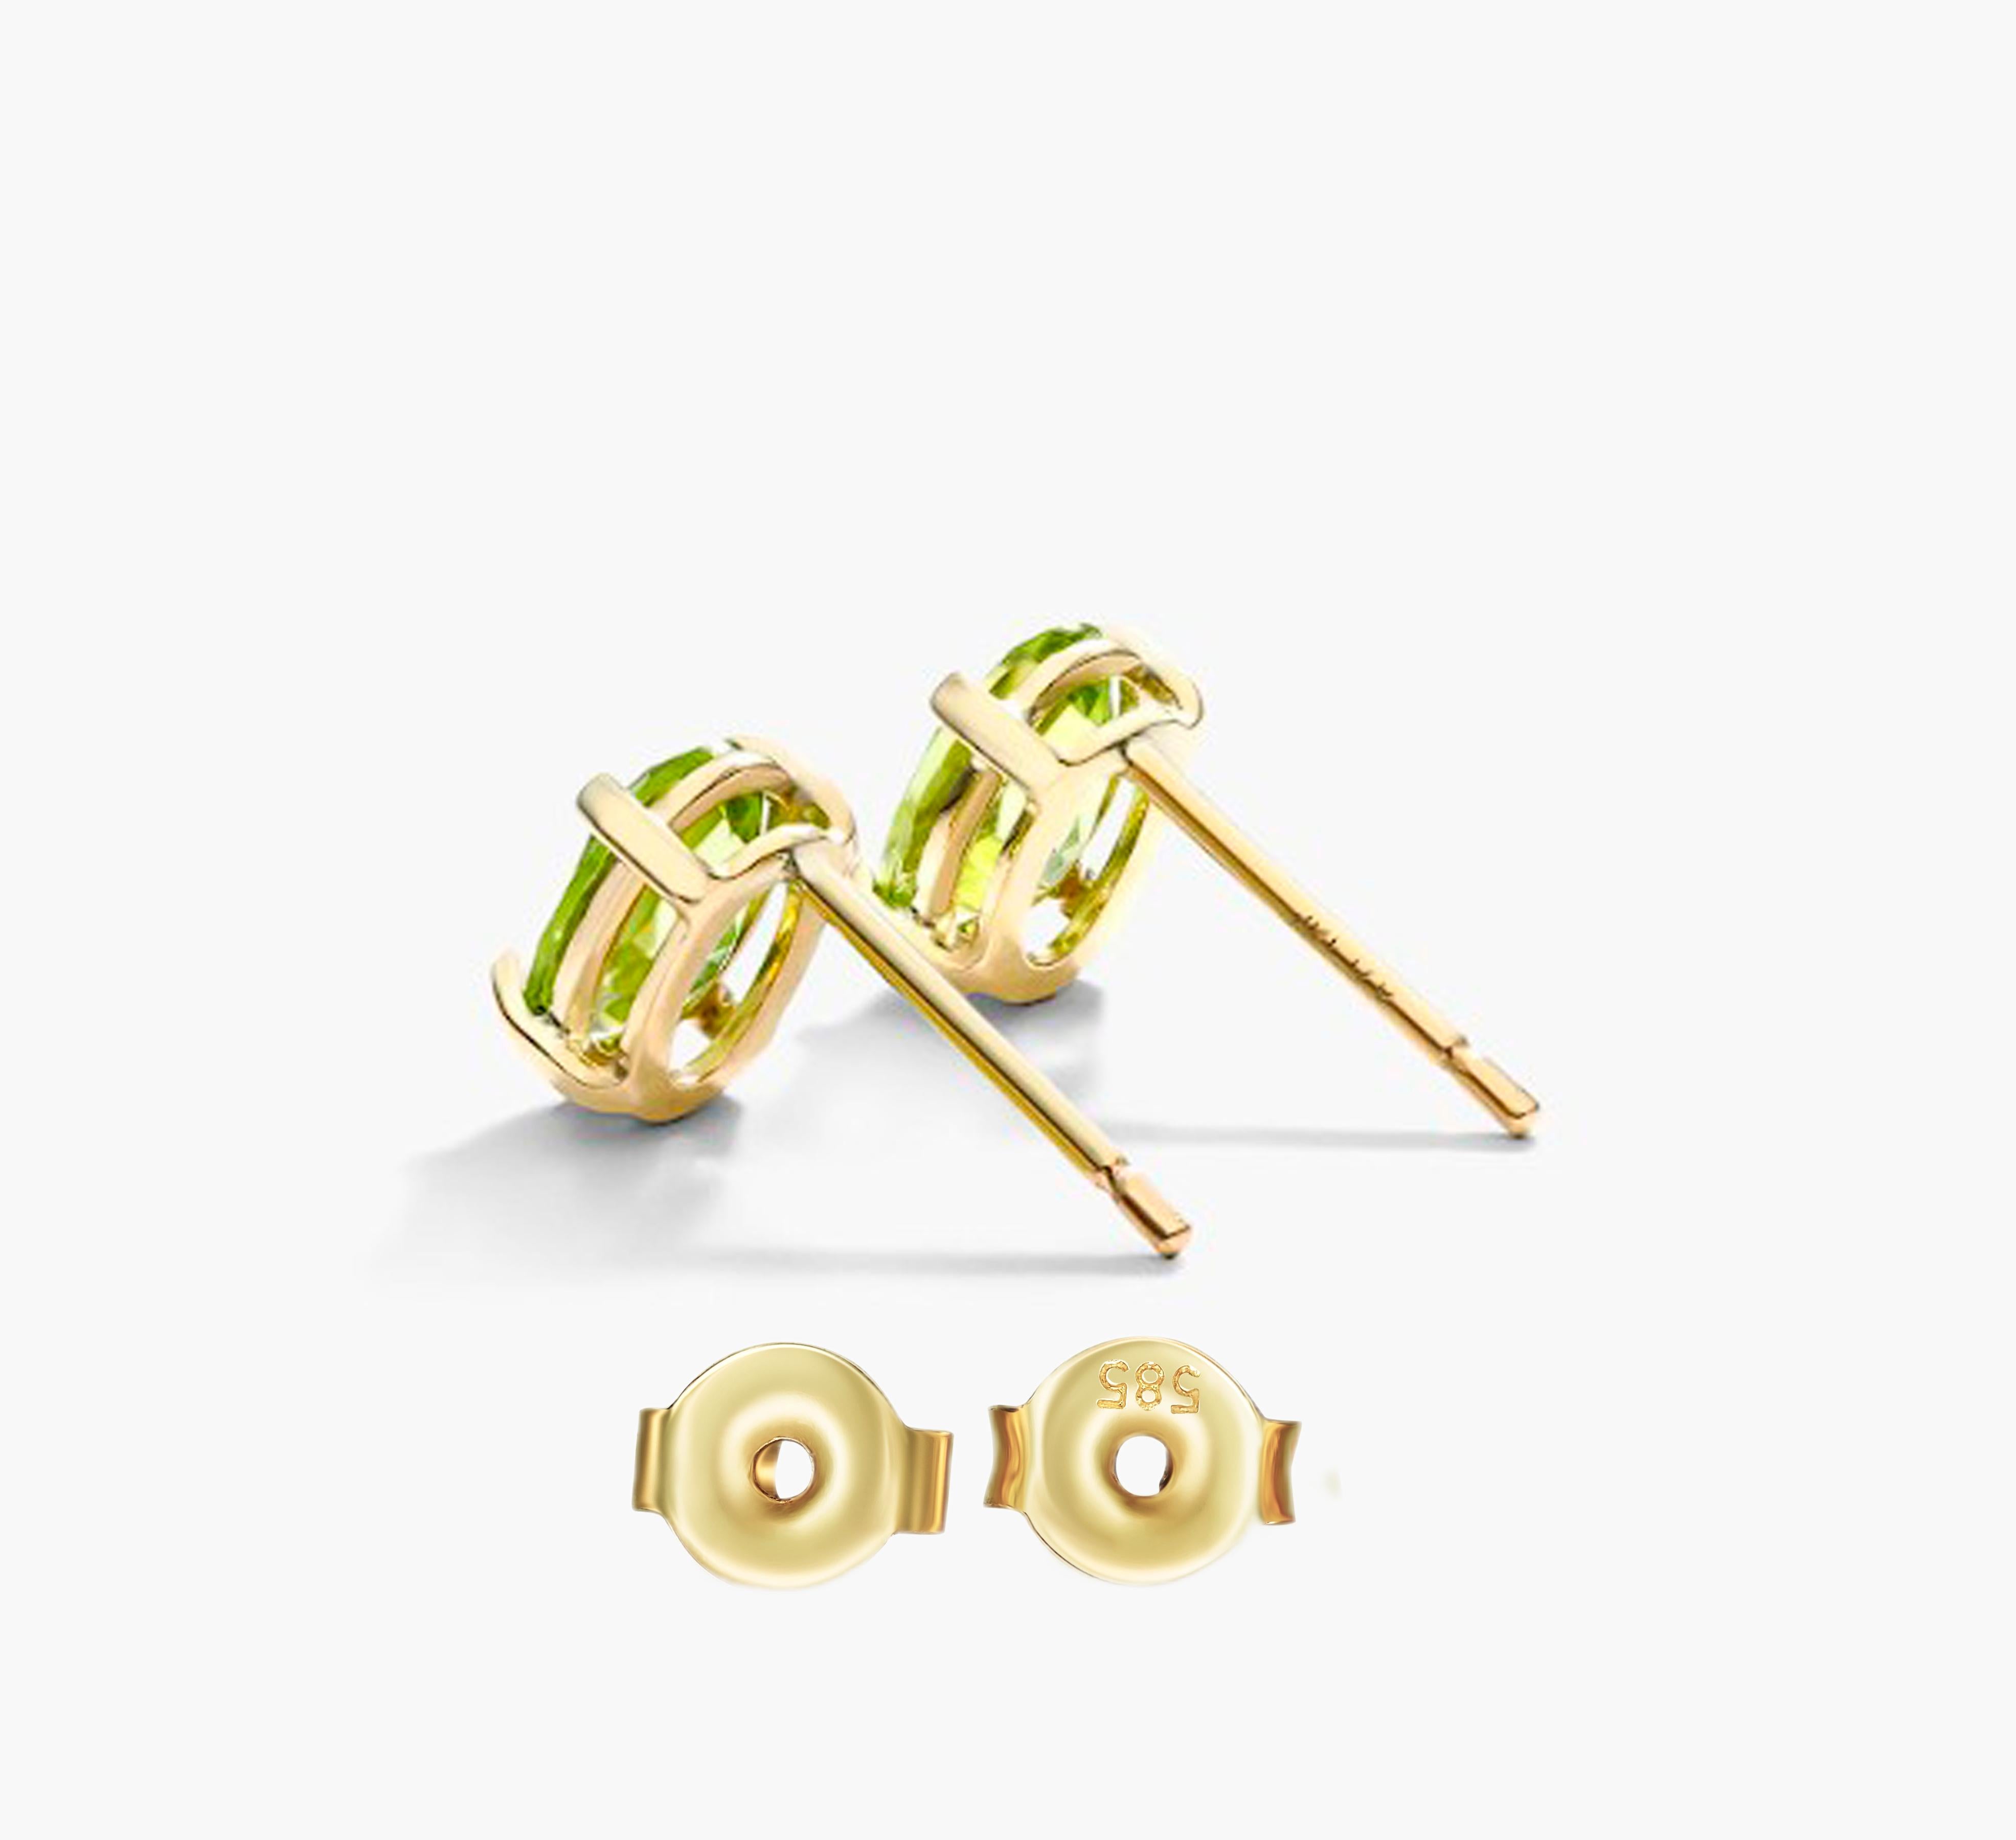 Modern August birthstone peridot 14k gold earrings studs For Sale